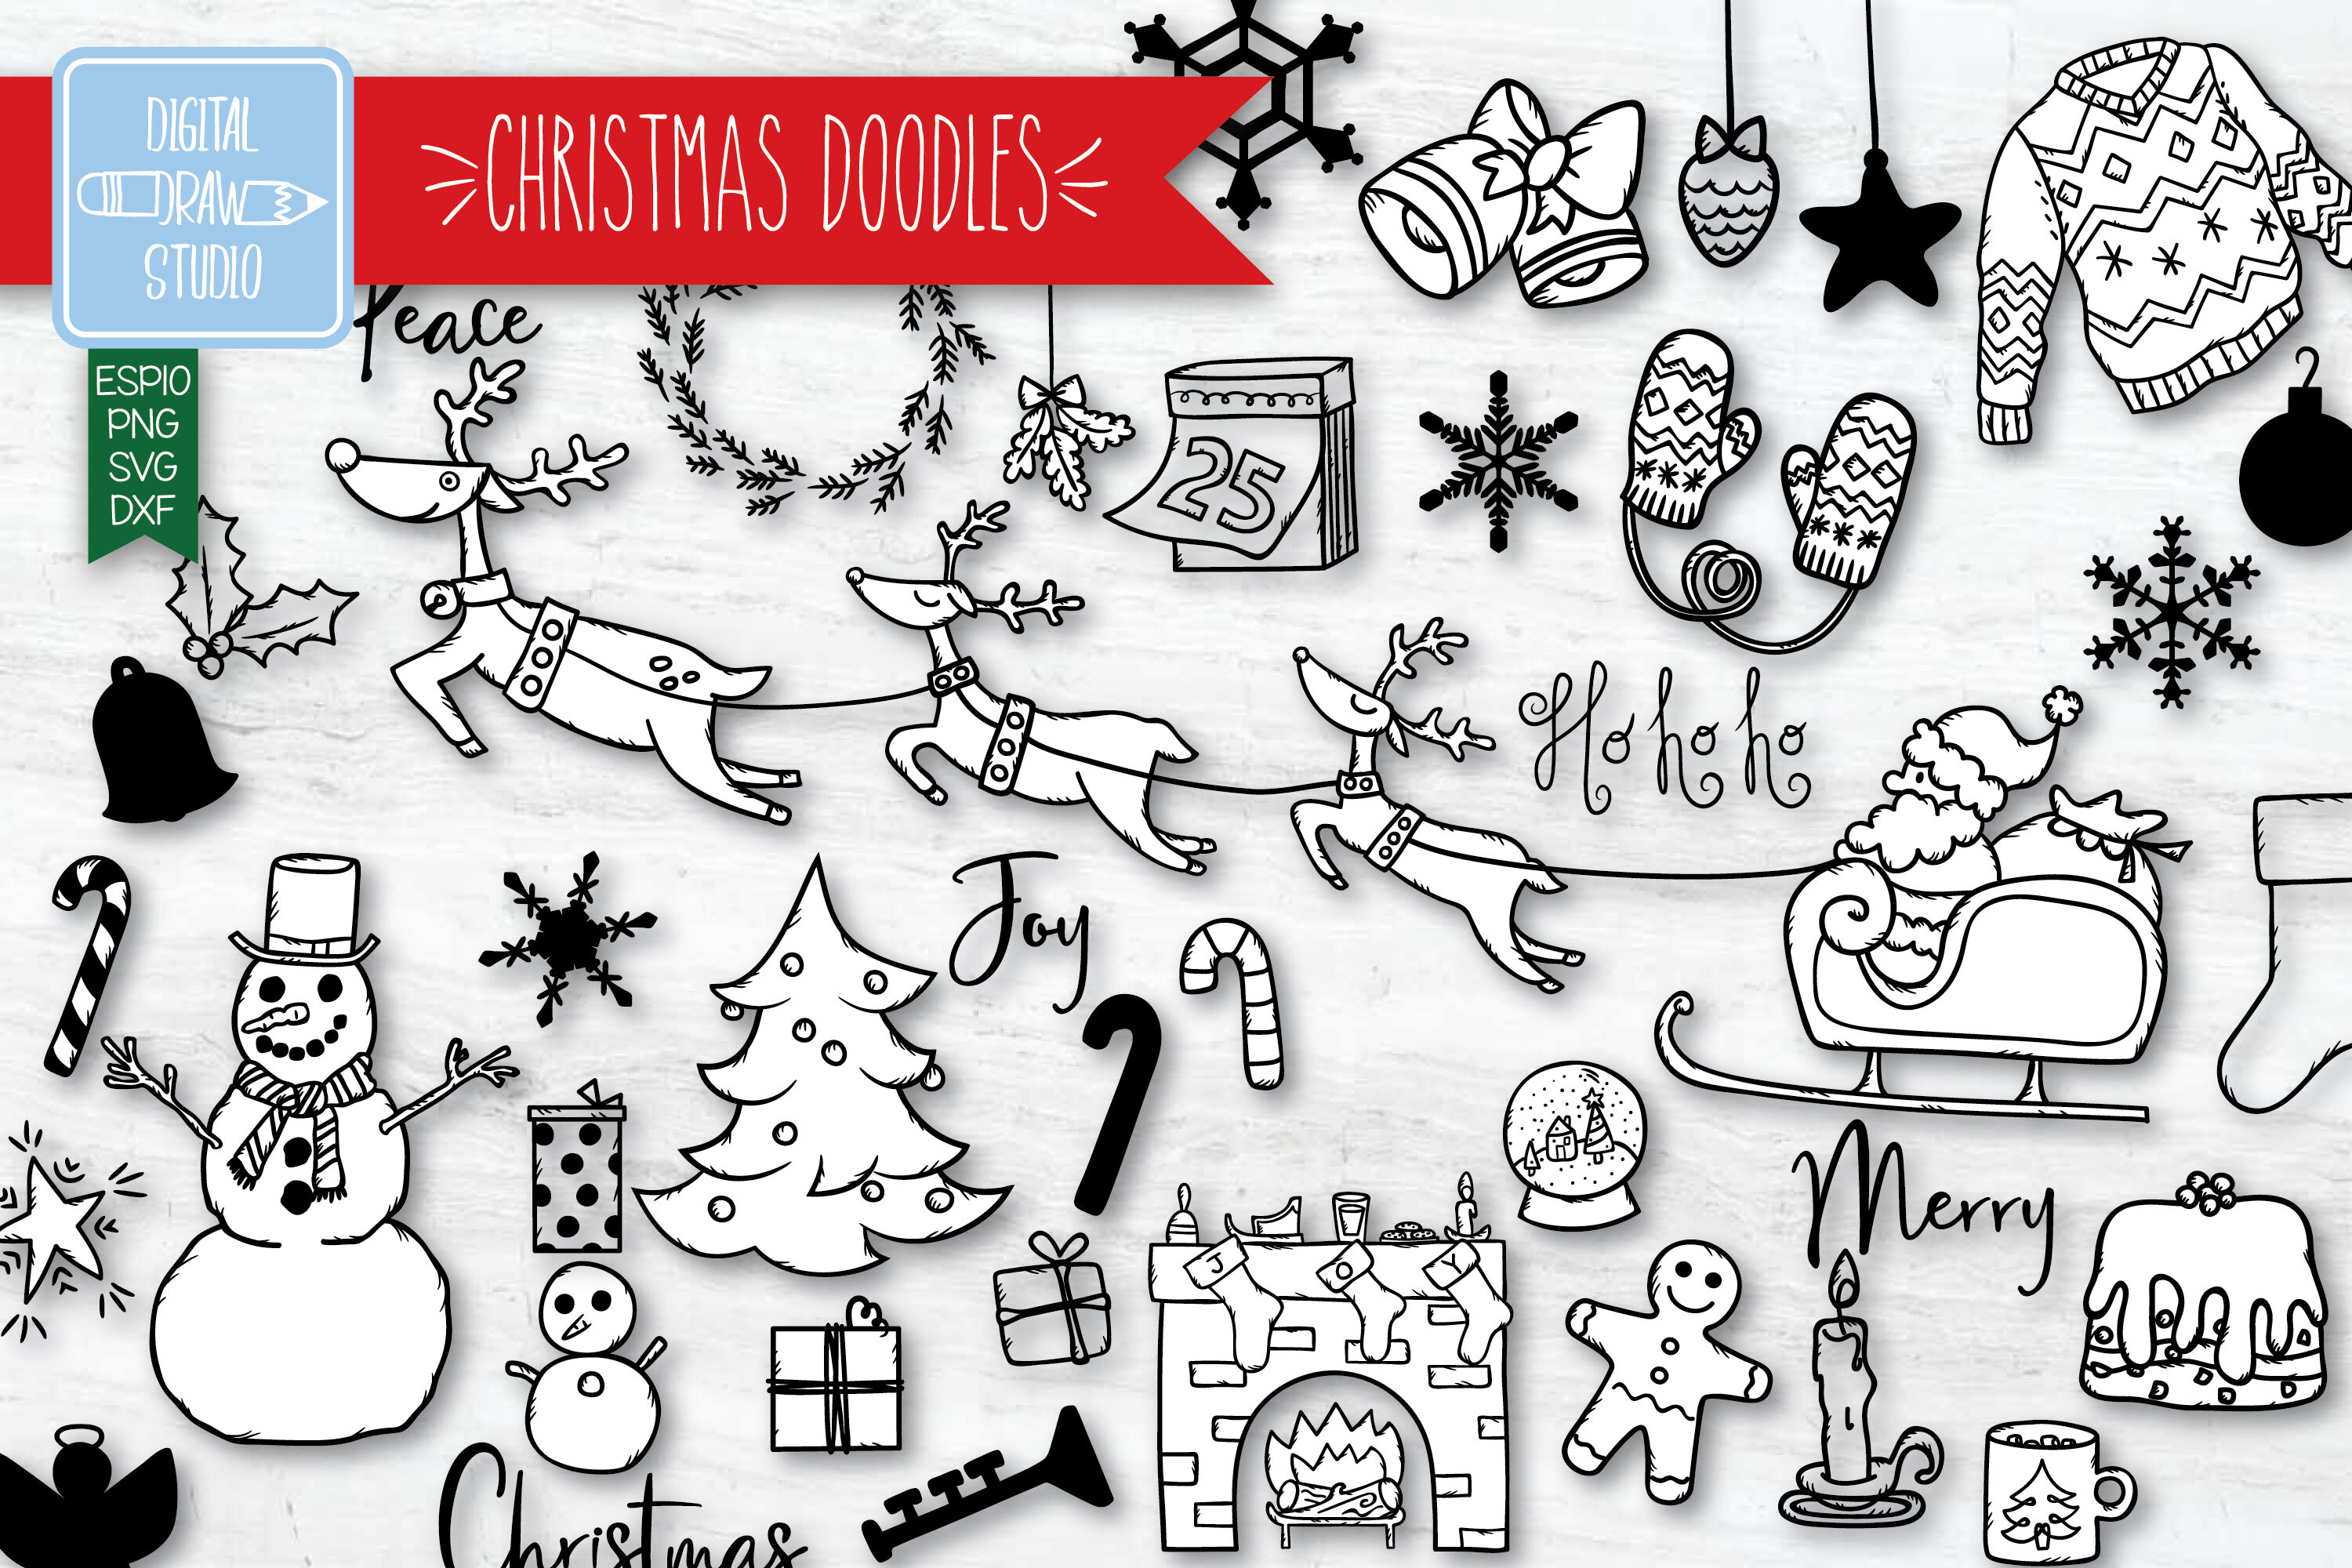 Hand Drawn Christmas Clip Art New Year Holiday Winter Party By Digital Draw Studio Thehungryjpeg Com